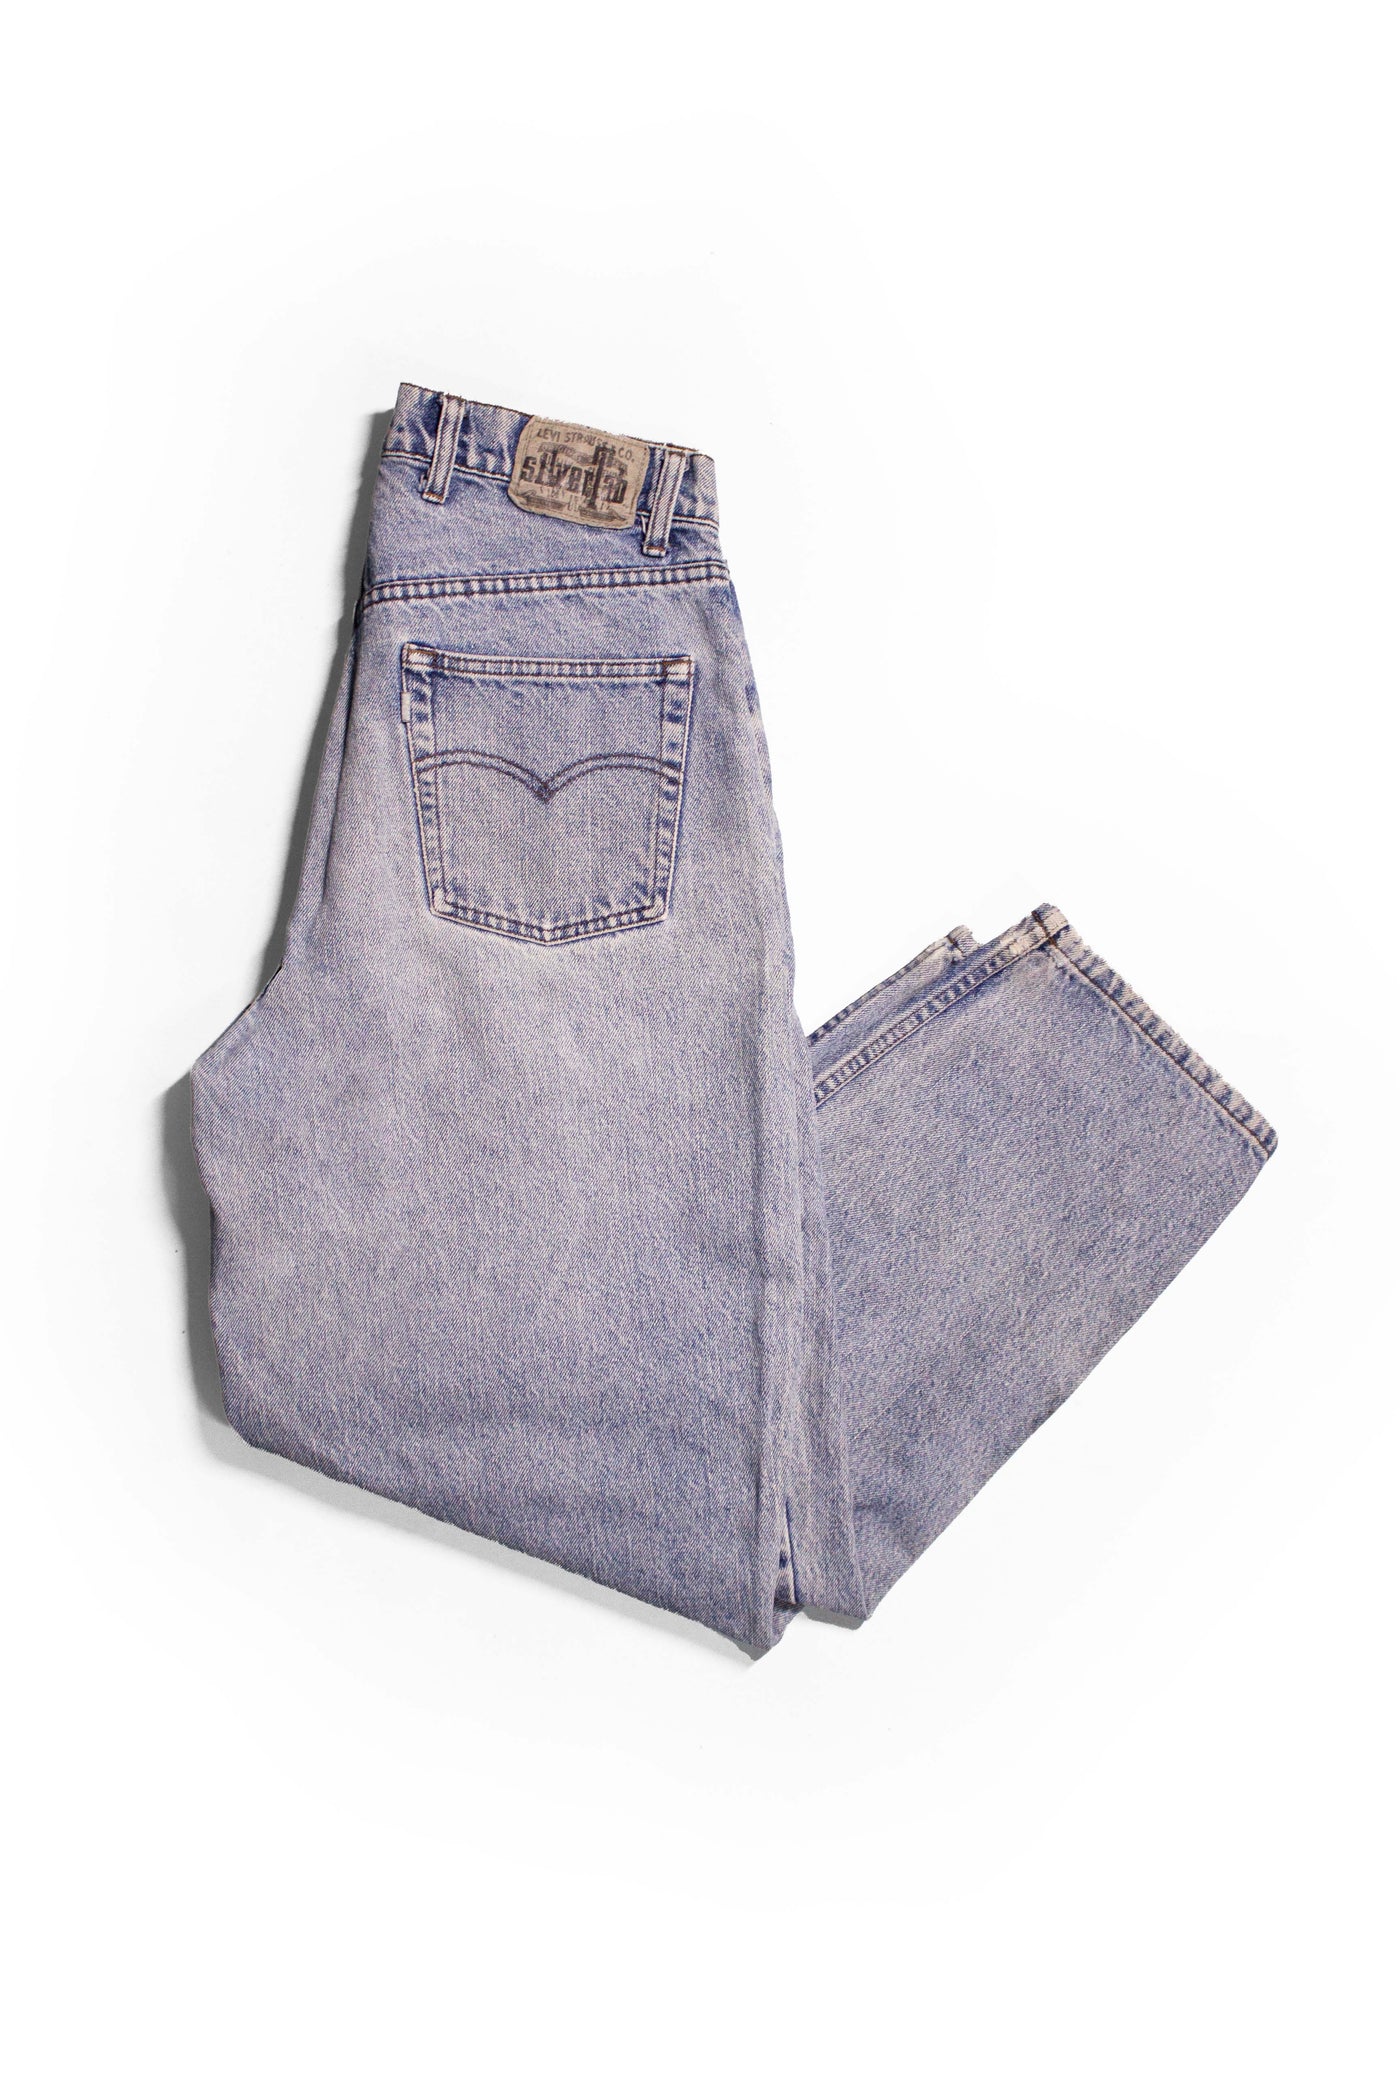 Vintage 90s Levi’s Silvertab Lightwash Jeans